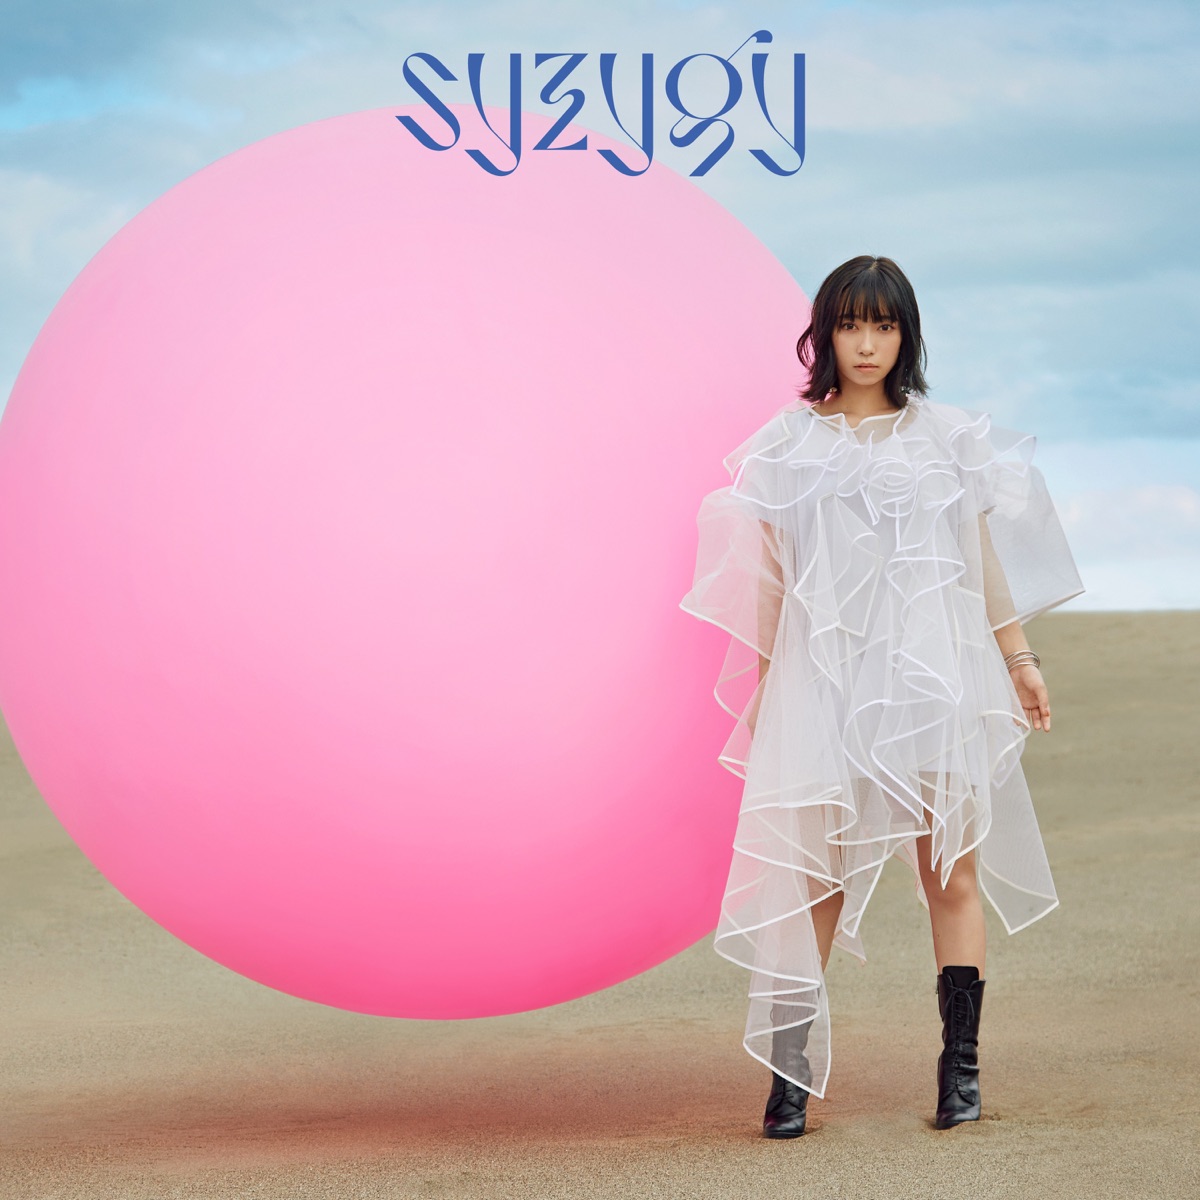 Cover art for『Aika Kobayashi - Happy ∞ Birthday』from the release『syzygy